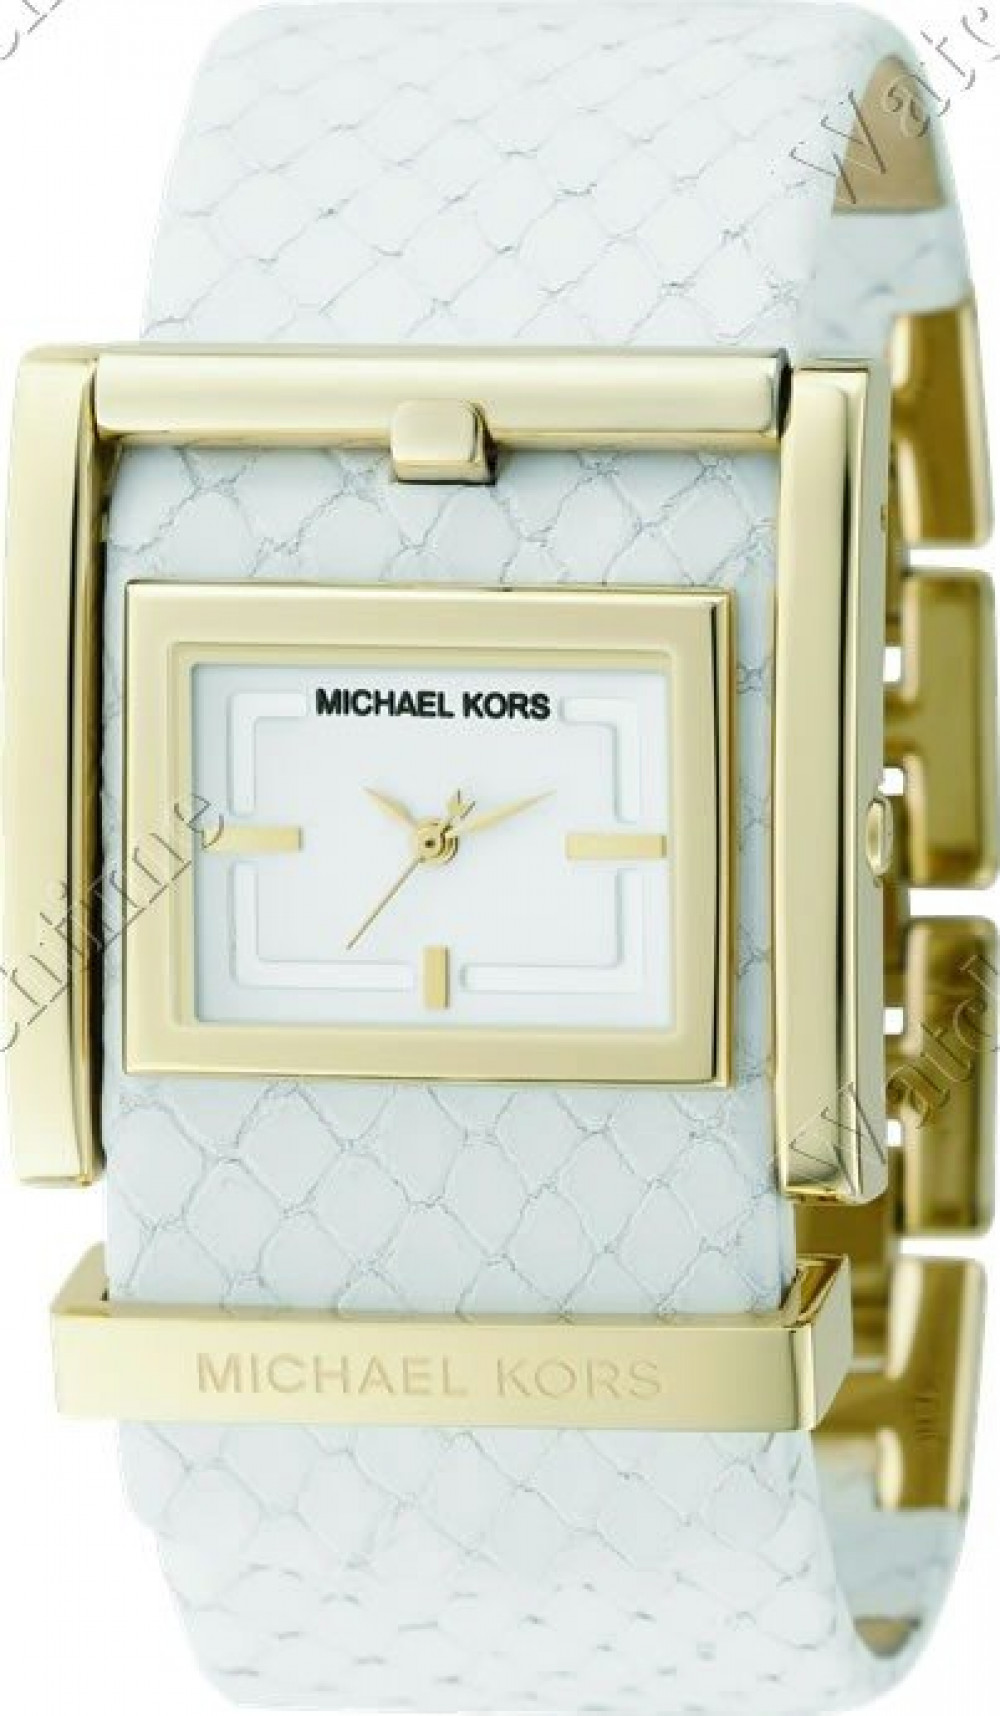 Zegarek firmy Michael Kors, model MK 2122